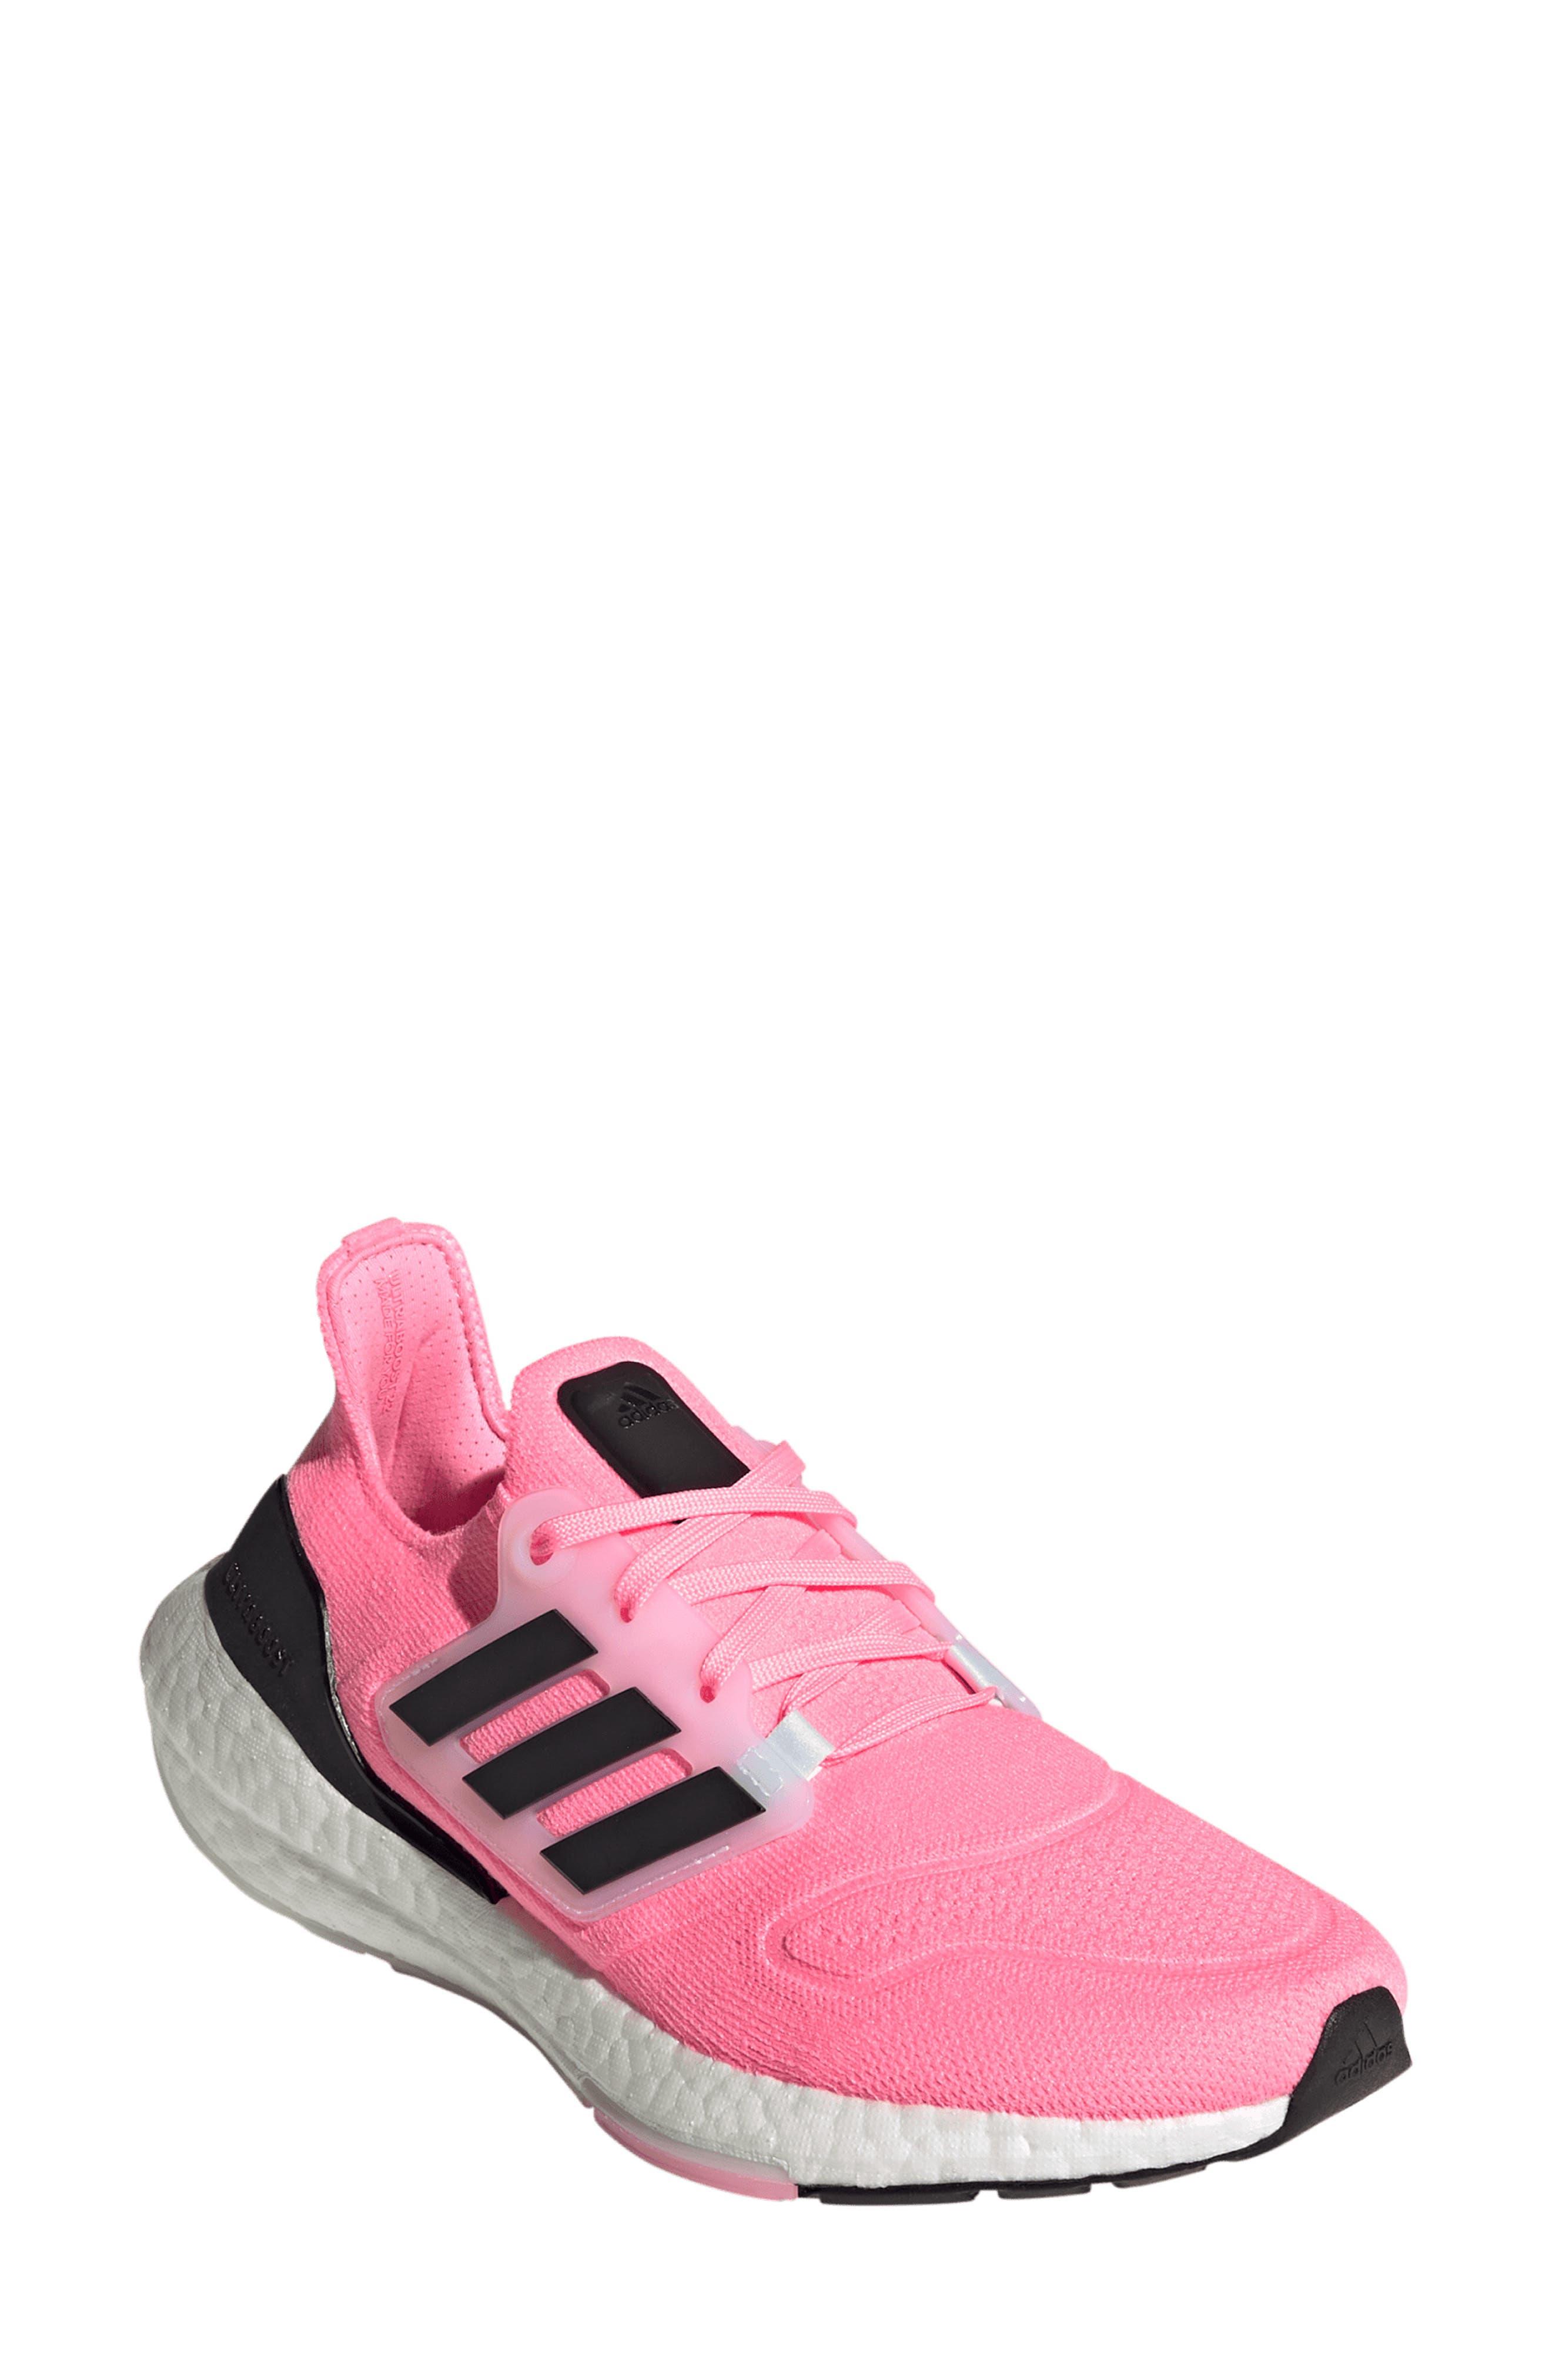 adidas Ultraboost 22 Running Shoe in Pink | Lyst